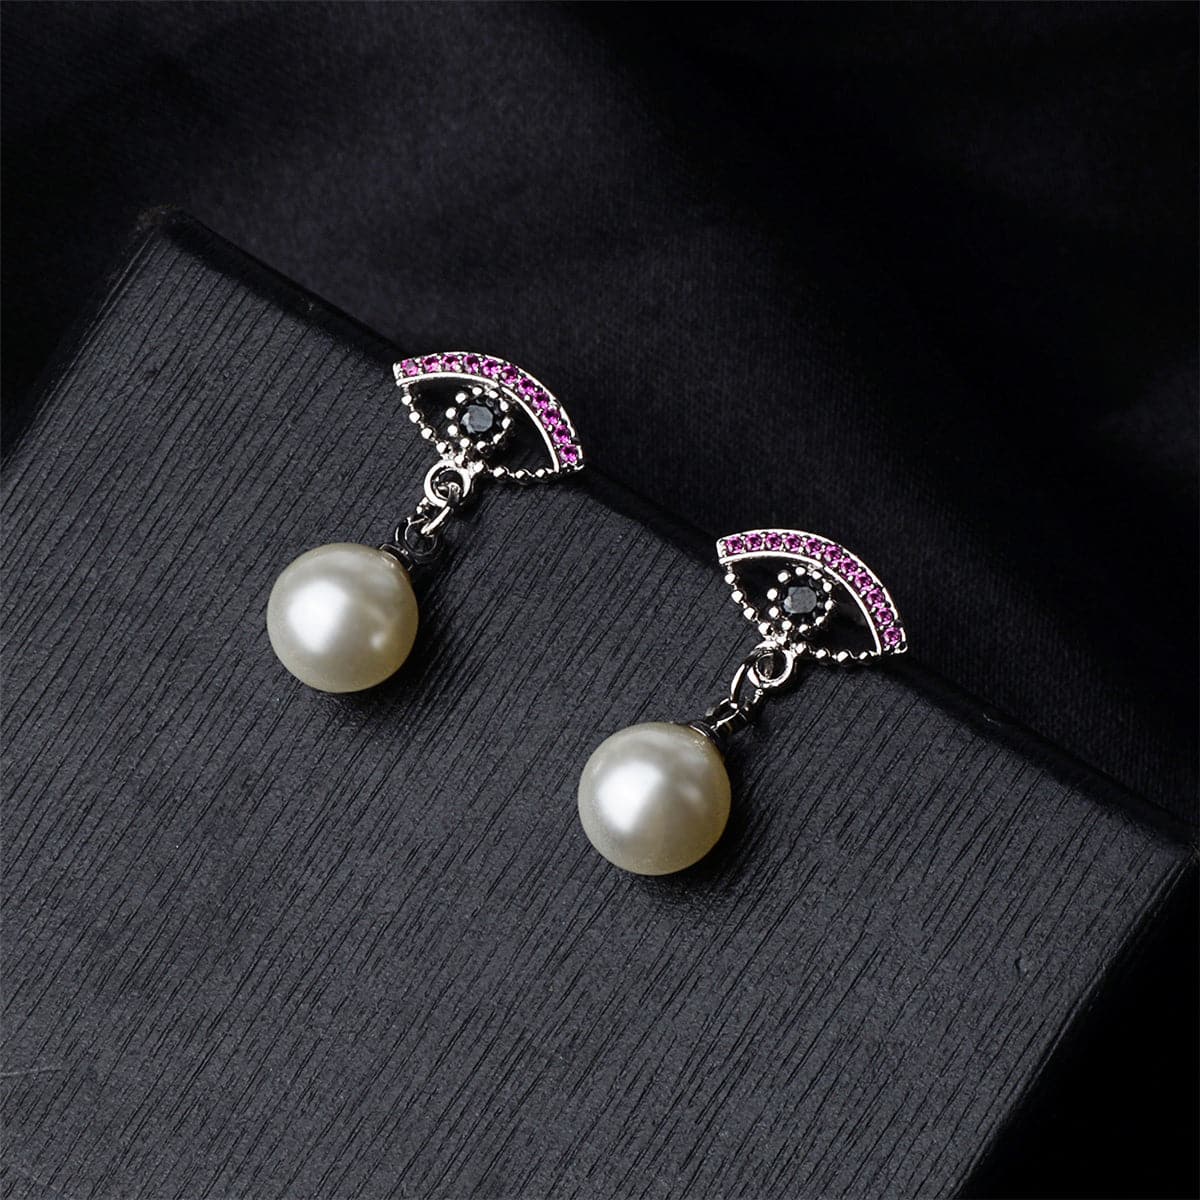 Pearl & Cubic Zirconia Silver-Plated Evil Eye Drop Earrings